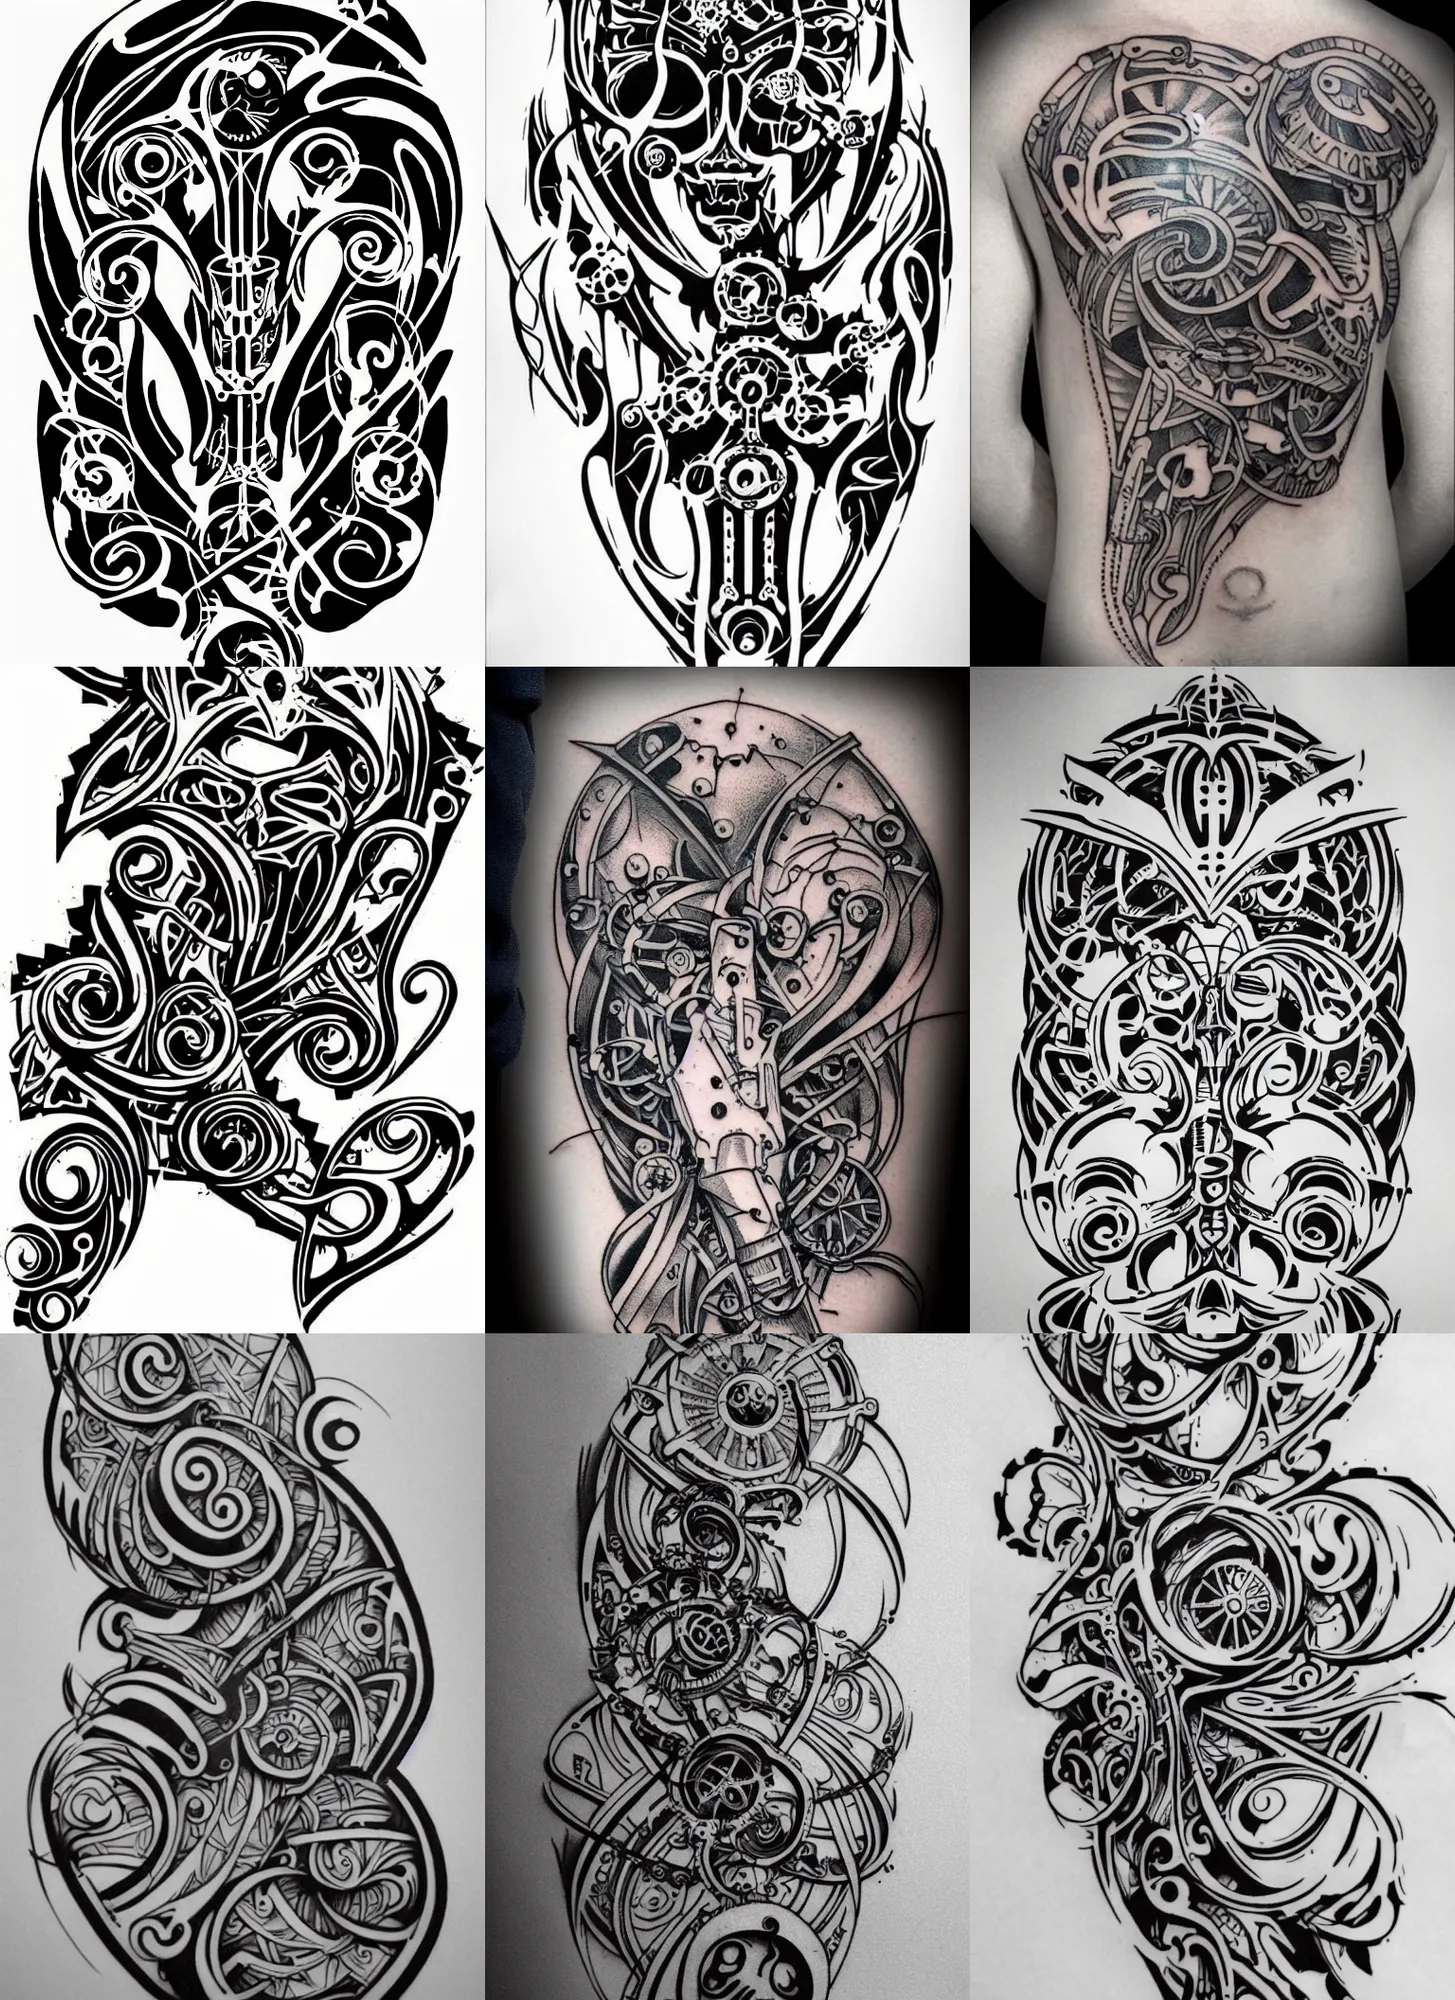 Tattoo Design Stencil biomechanical, Stable Diffusion